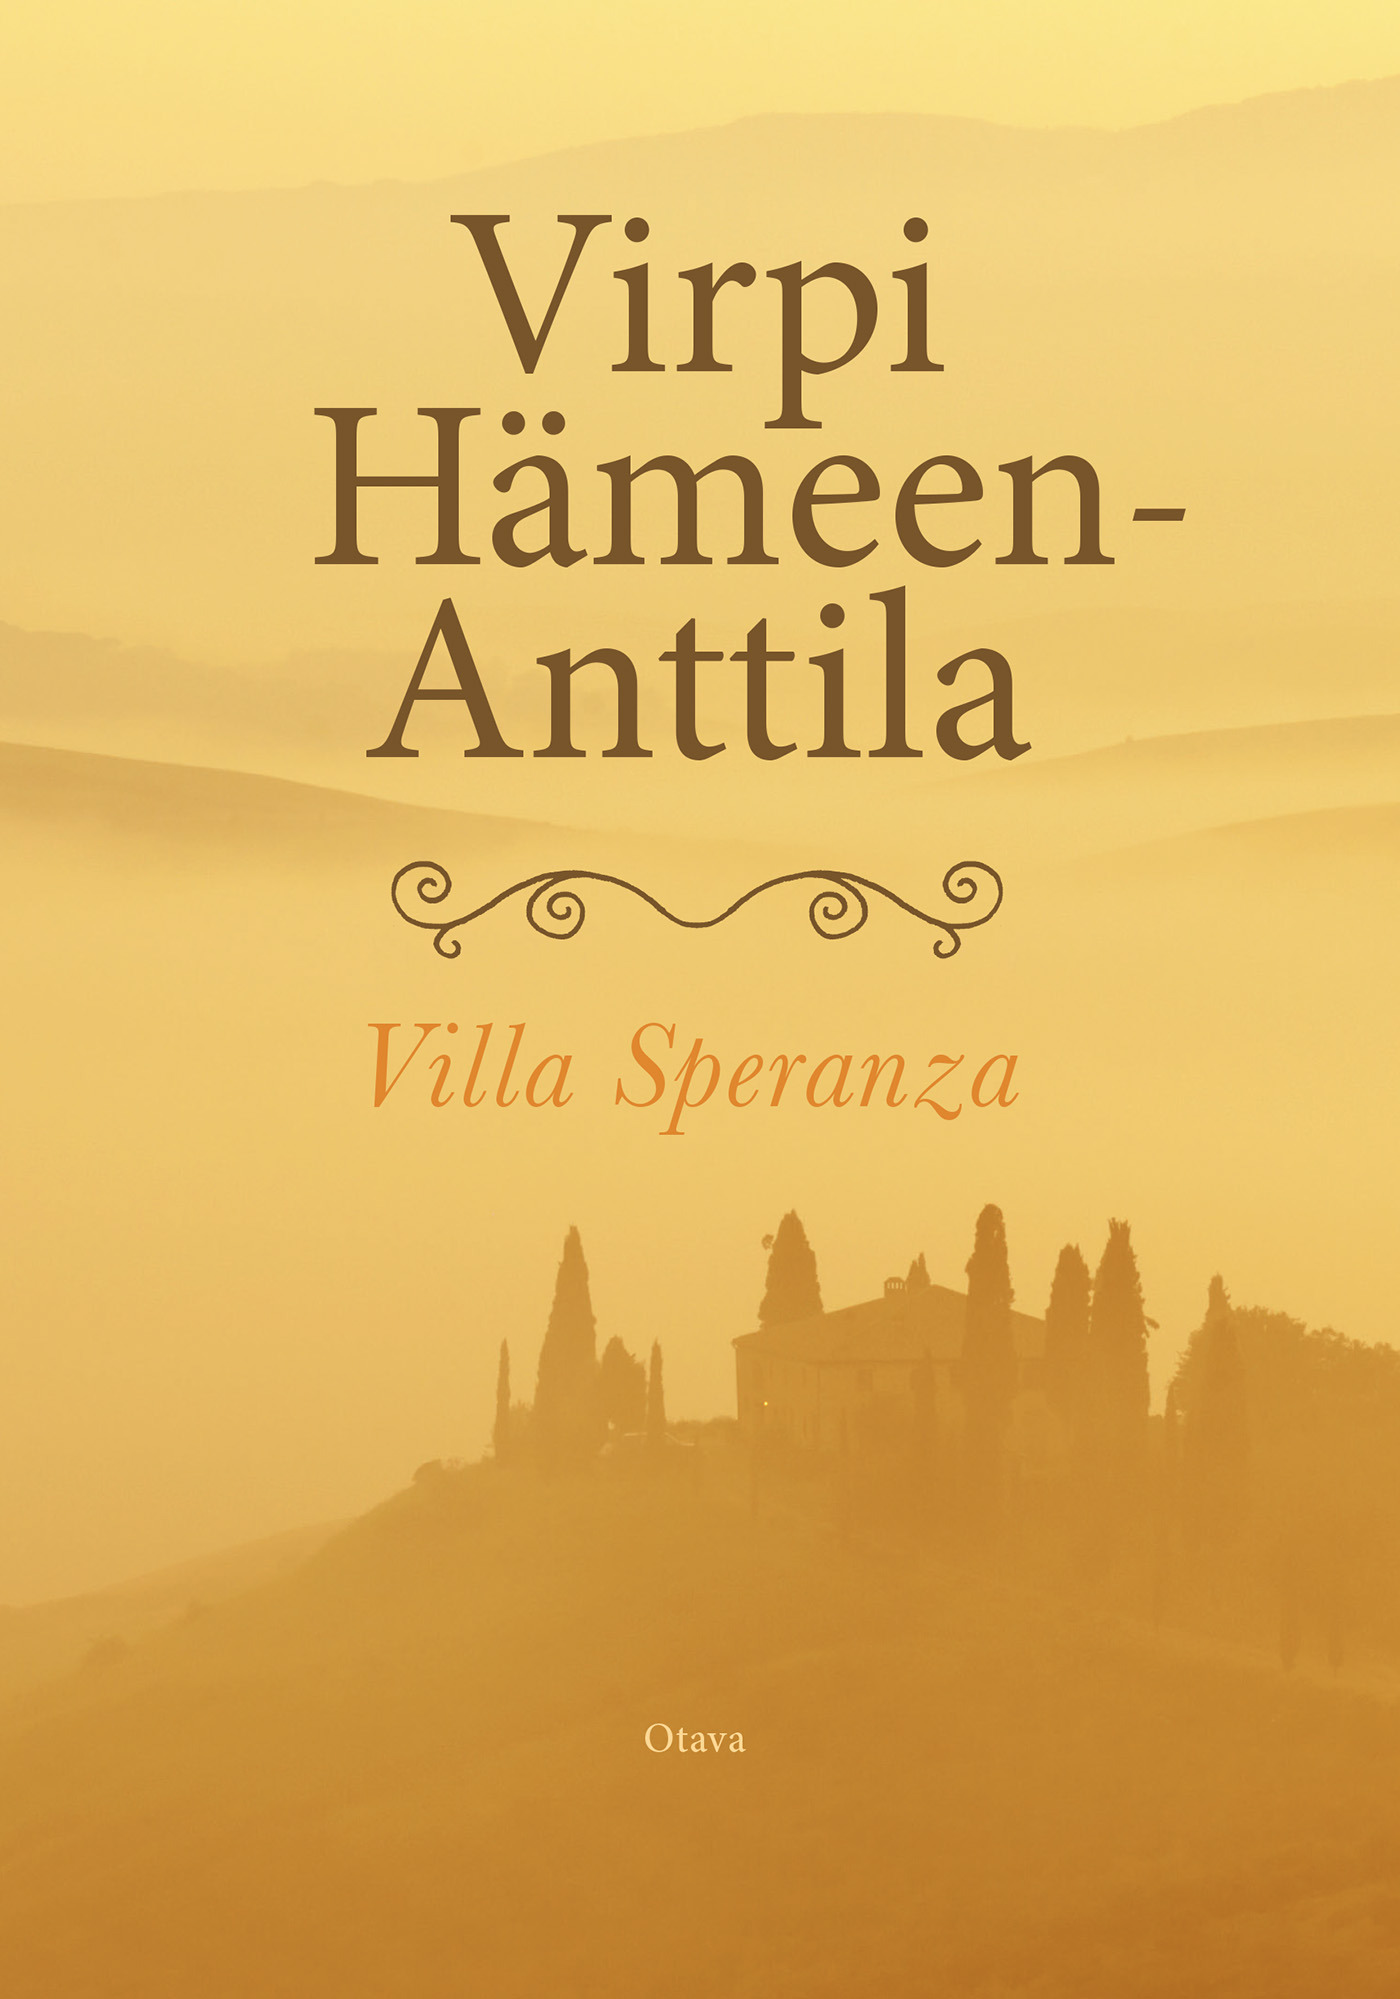 Hämeen-Anttila, Virpi - Villa Speranza, e-kirja